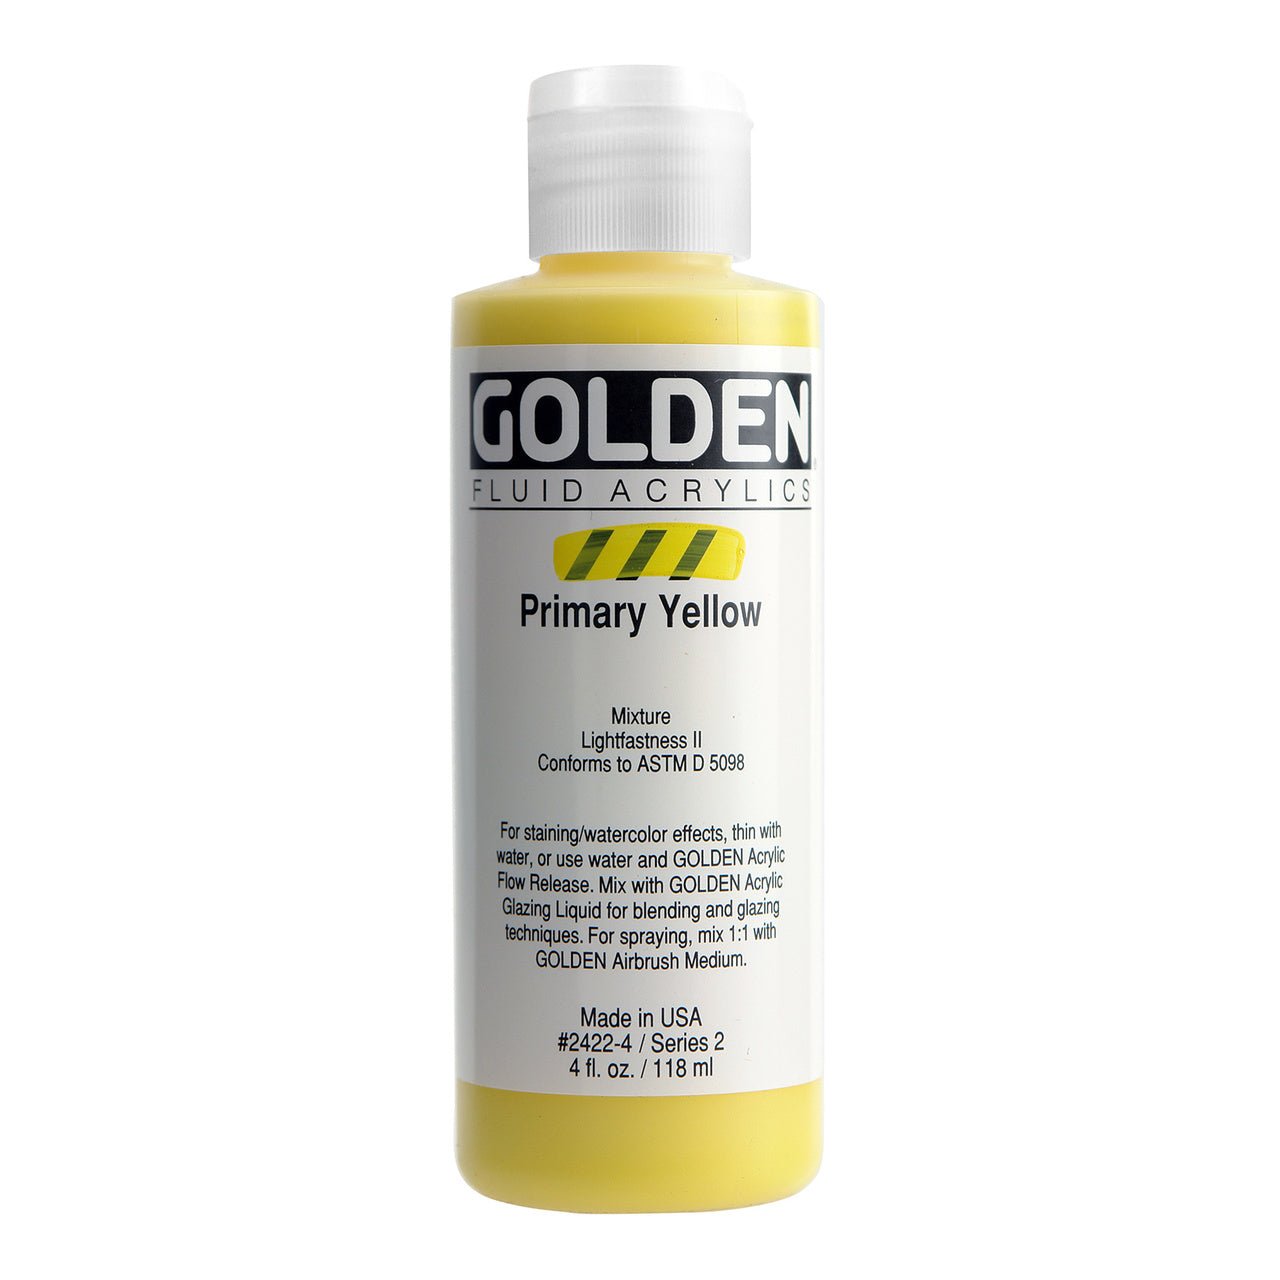 Golden Fluid Acrylic Primary Yellow 4 oz - merriartist.com